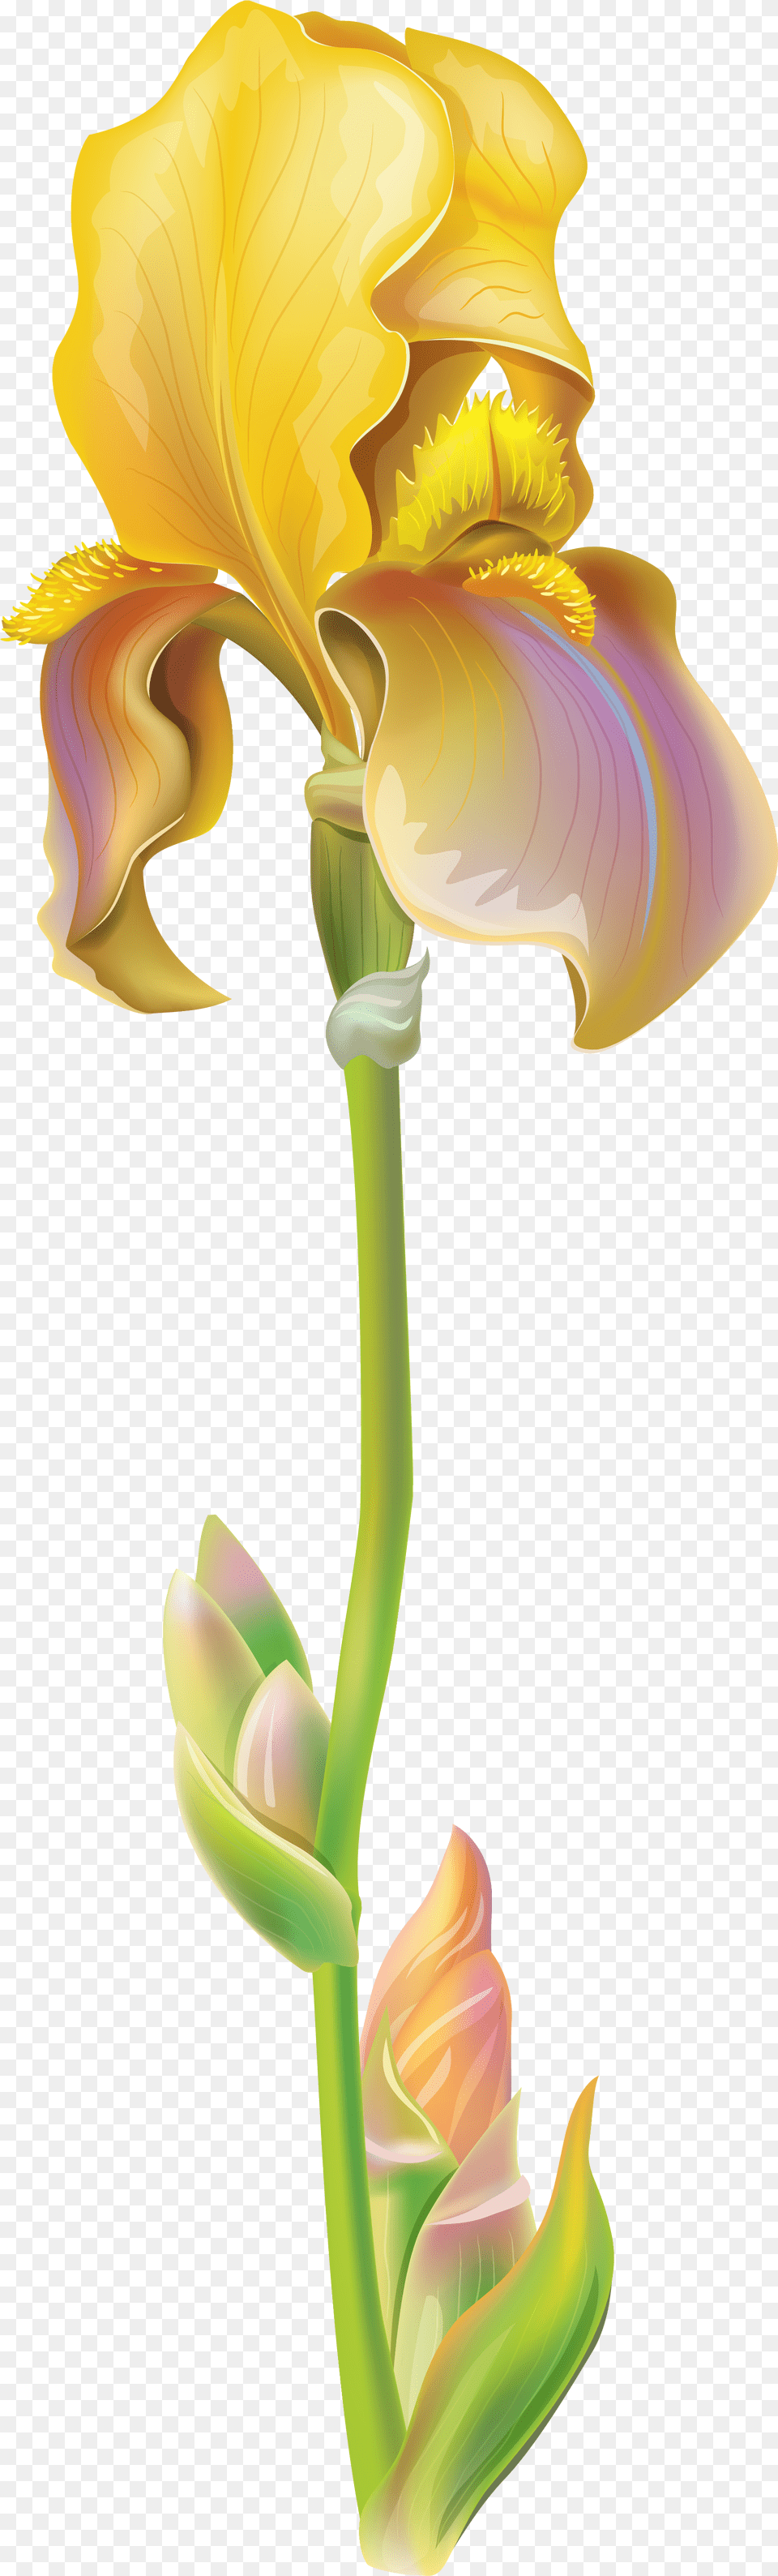 Purple Iris Flower Clipart Image Iris Flower, Petal, Plant, Adult, Female Free Transparent Png